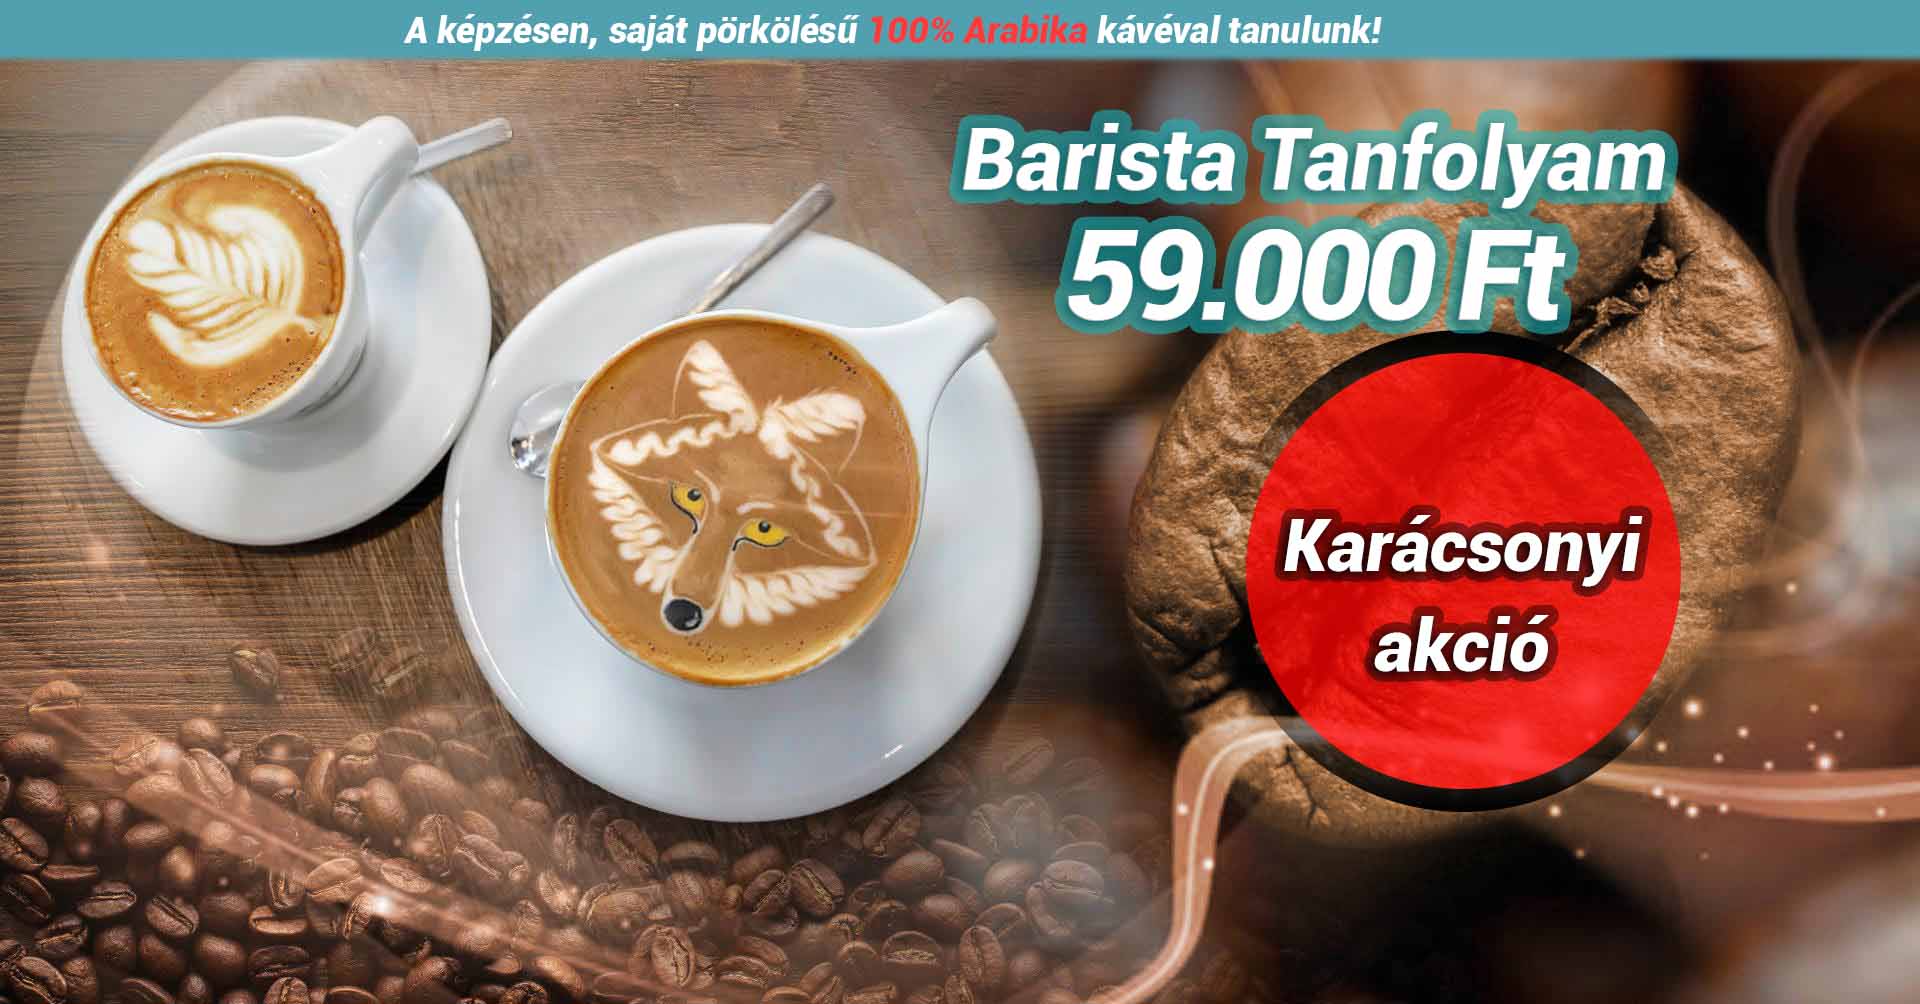 Barista Tanfolyam Akció 59.000.-FT ! Iratkozz be december 9.-ig!